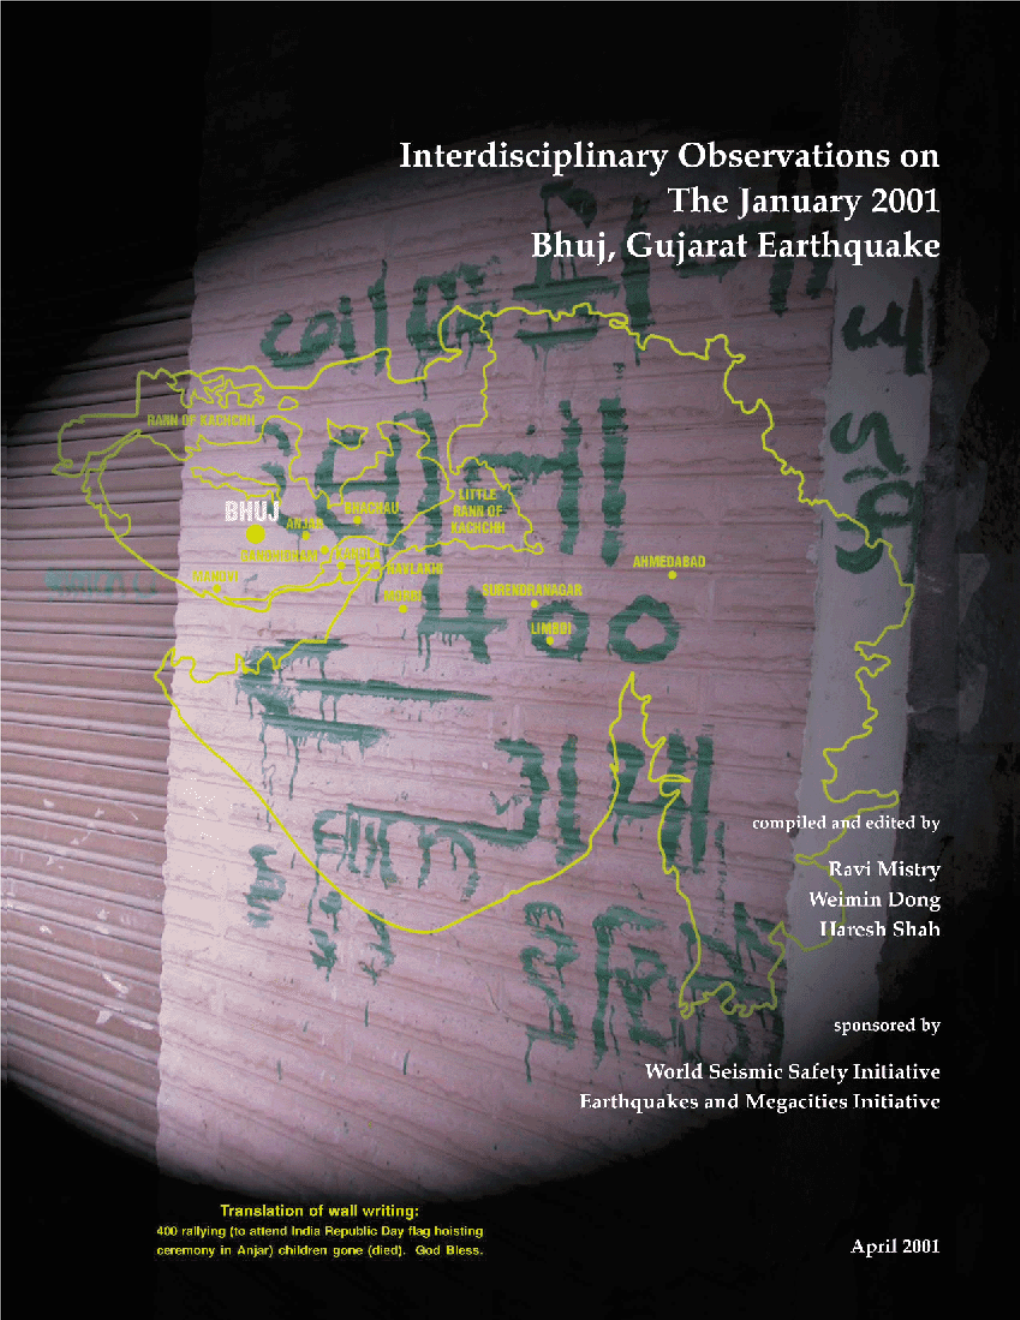 Interdisciplinary Observations on the January 2001 Bhuj, Gujarat Earthquake